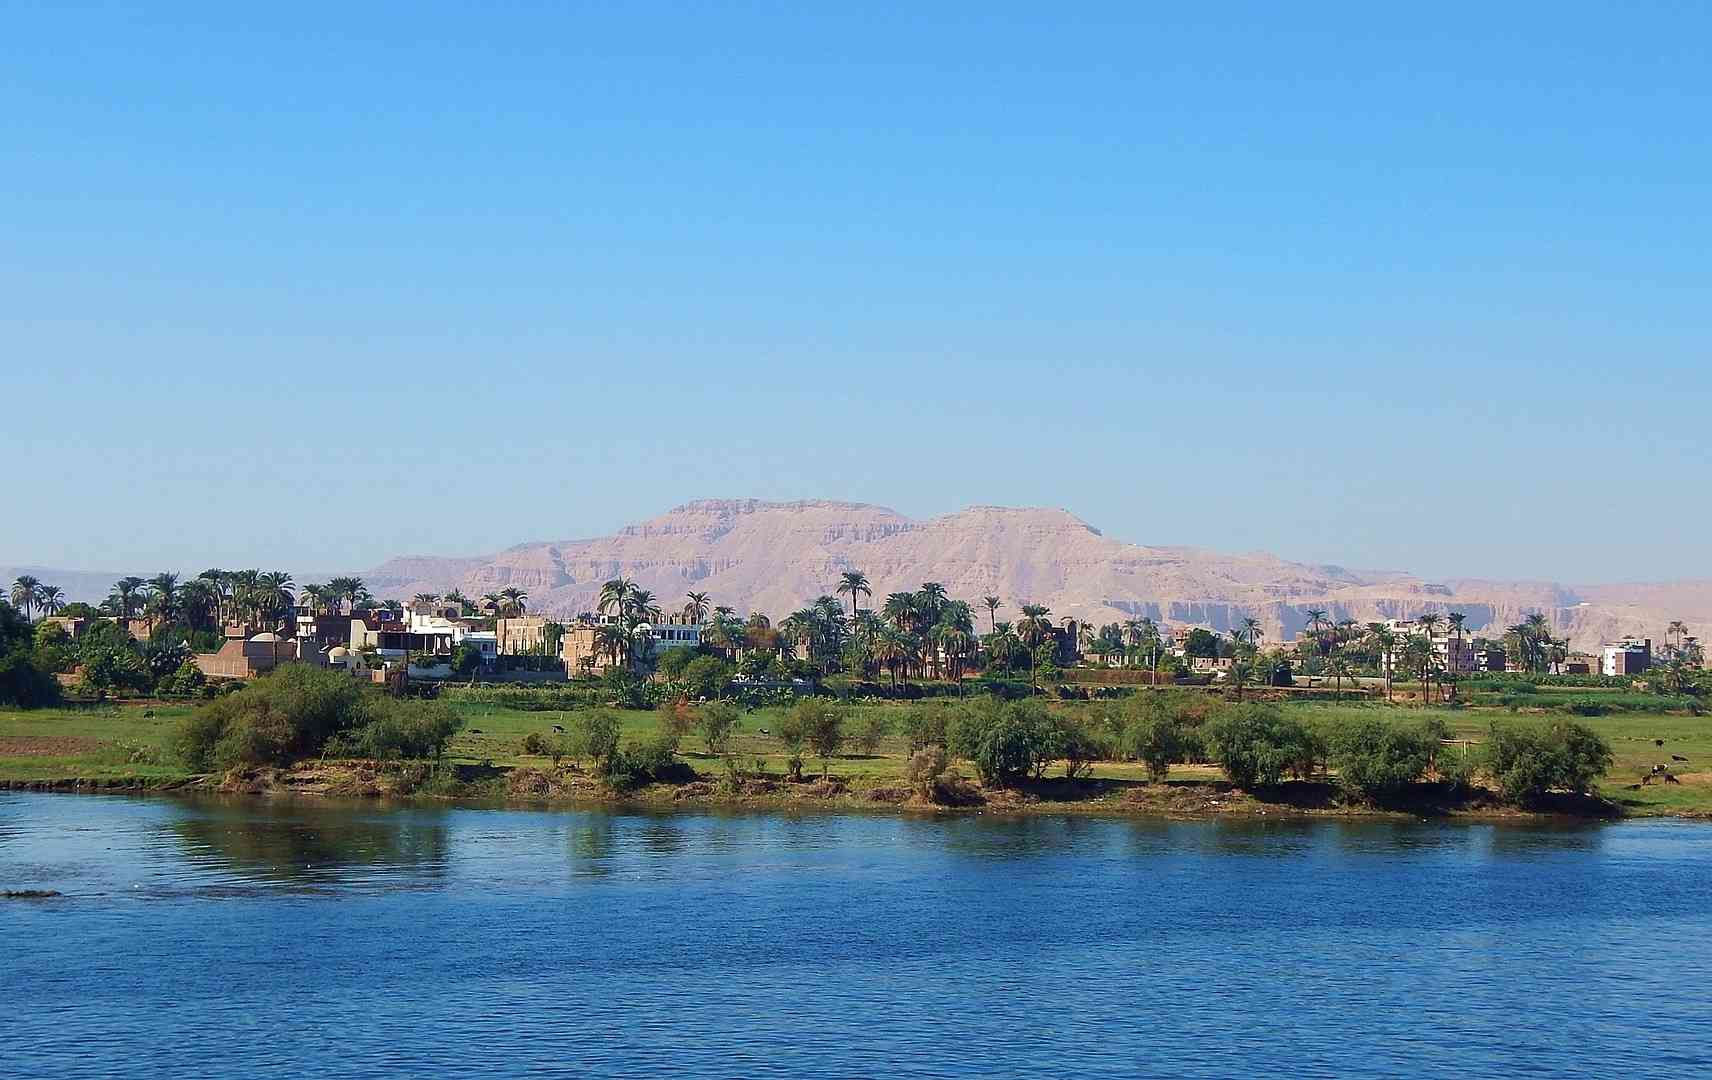 Ägypten: Grünes Ufer entlang des Nils